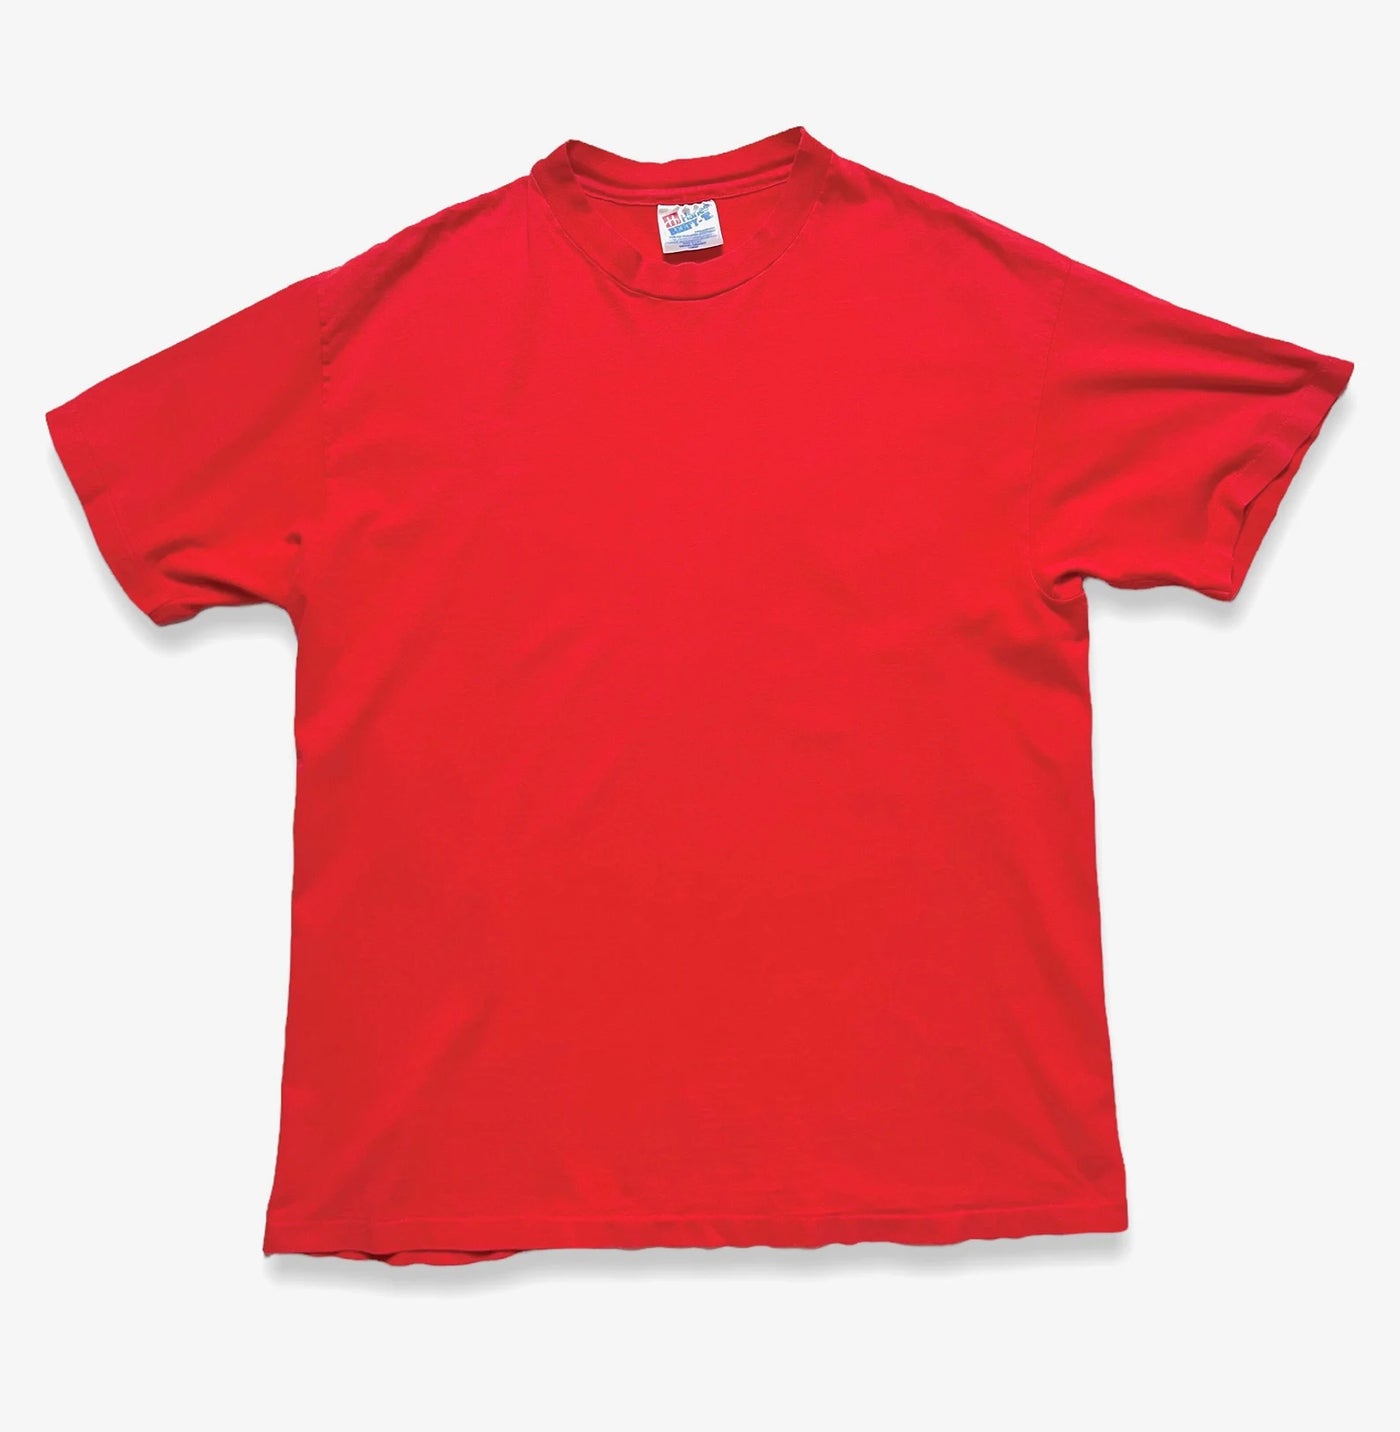 Plain T-Shirts